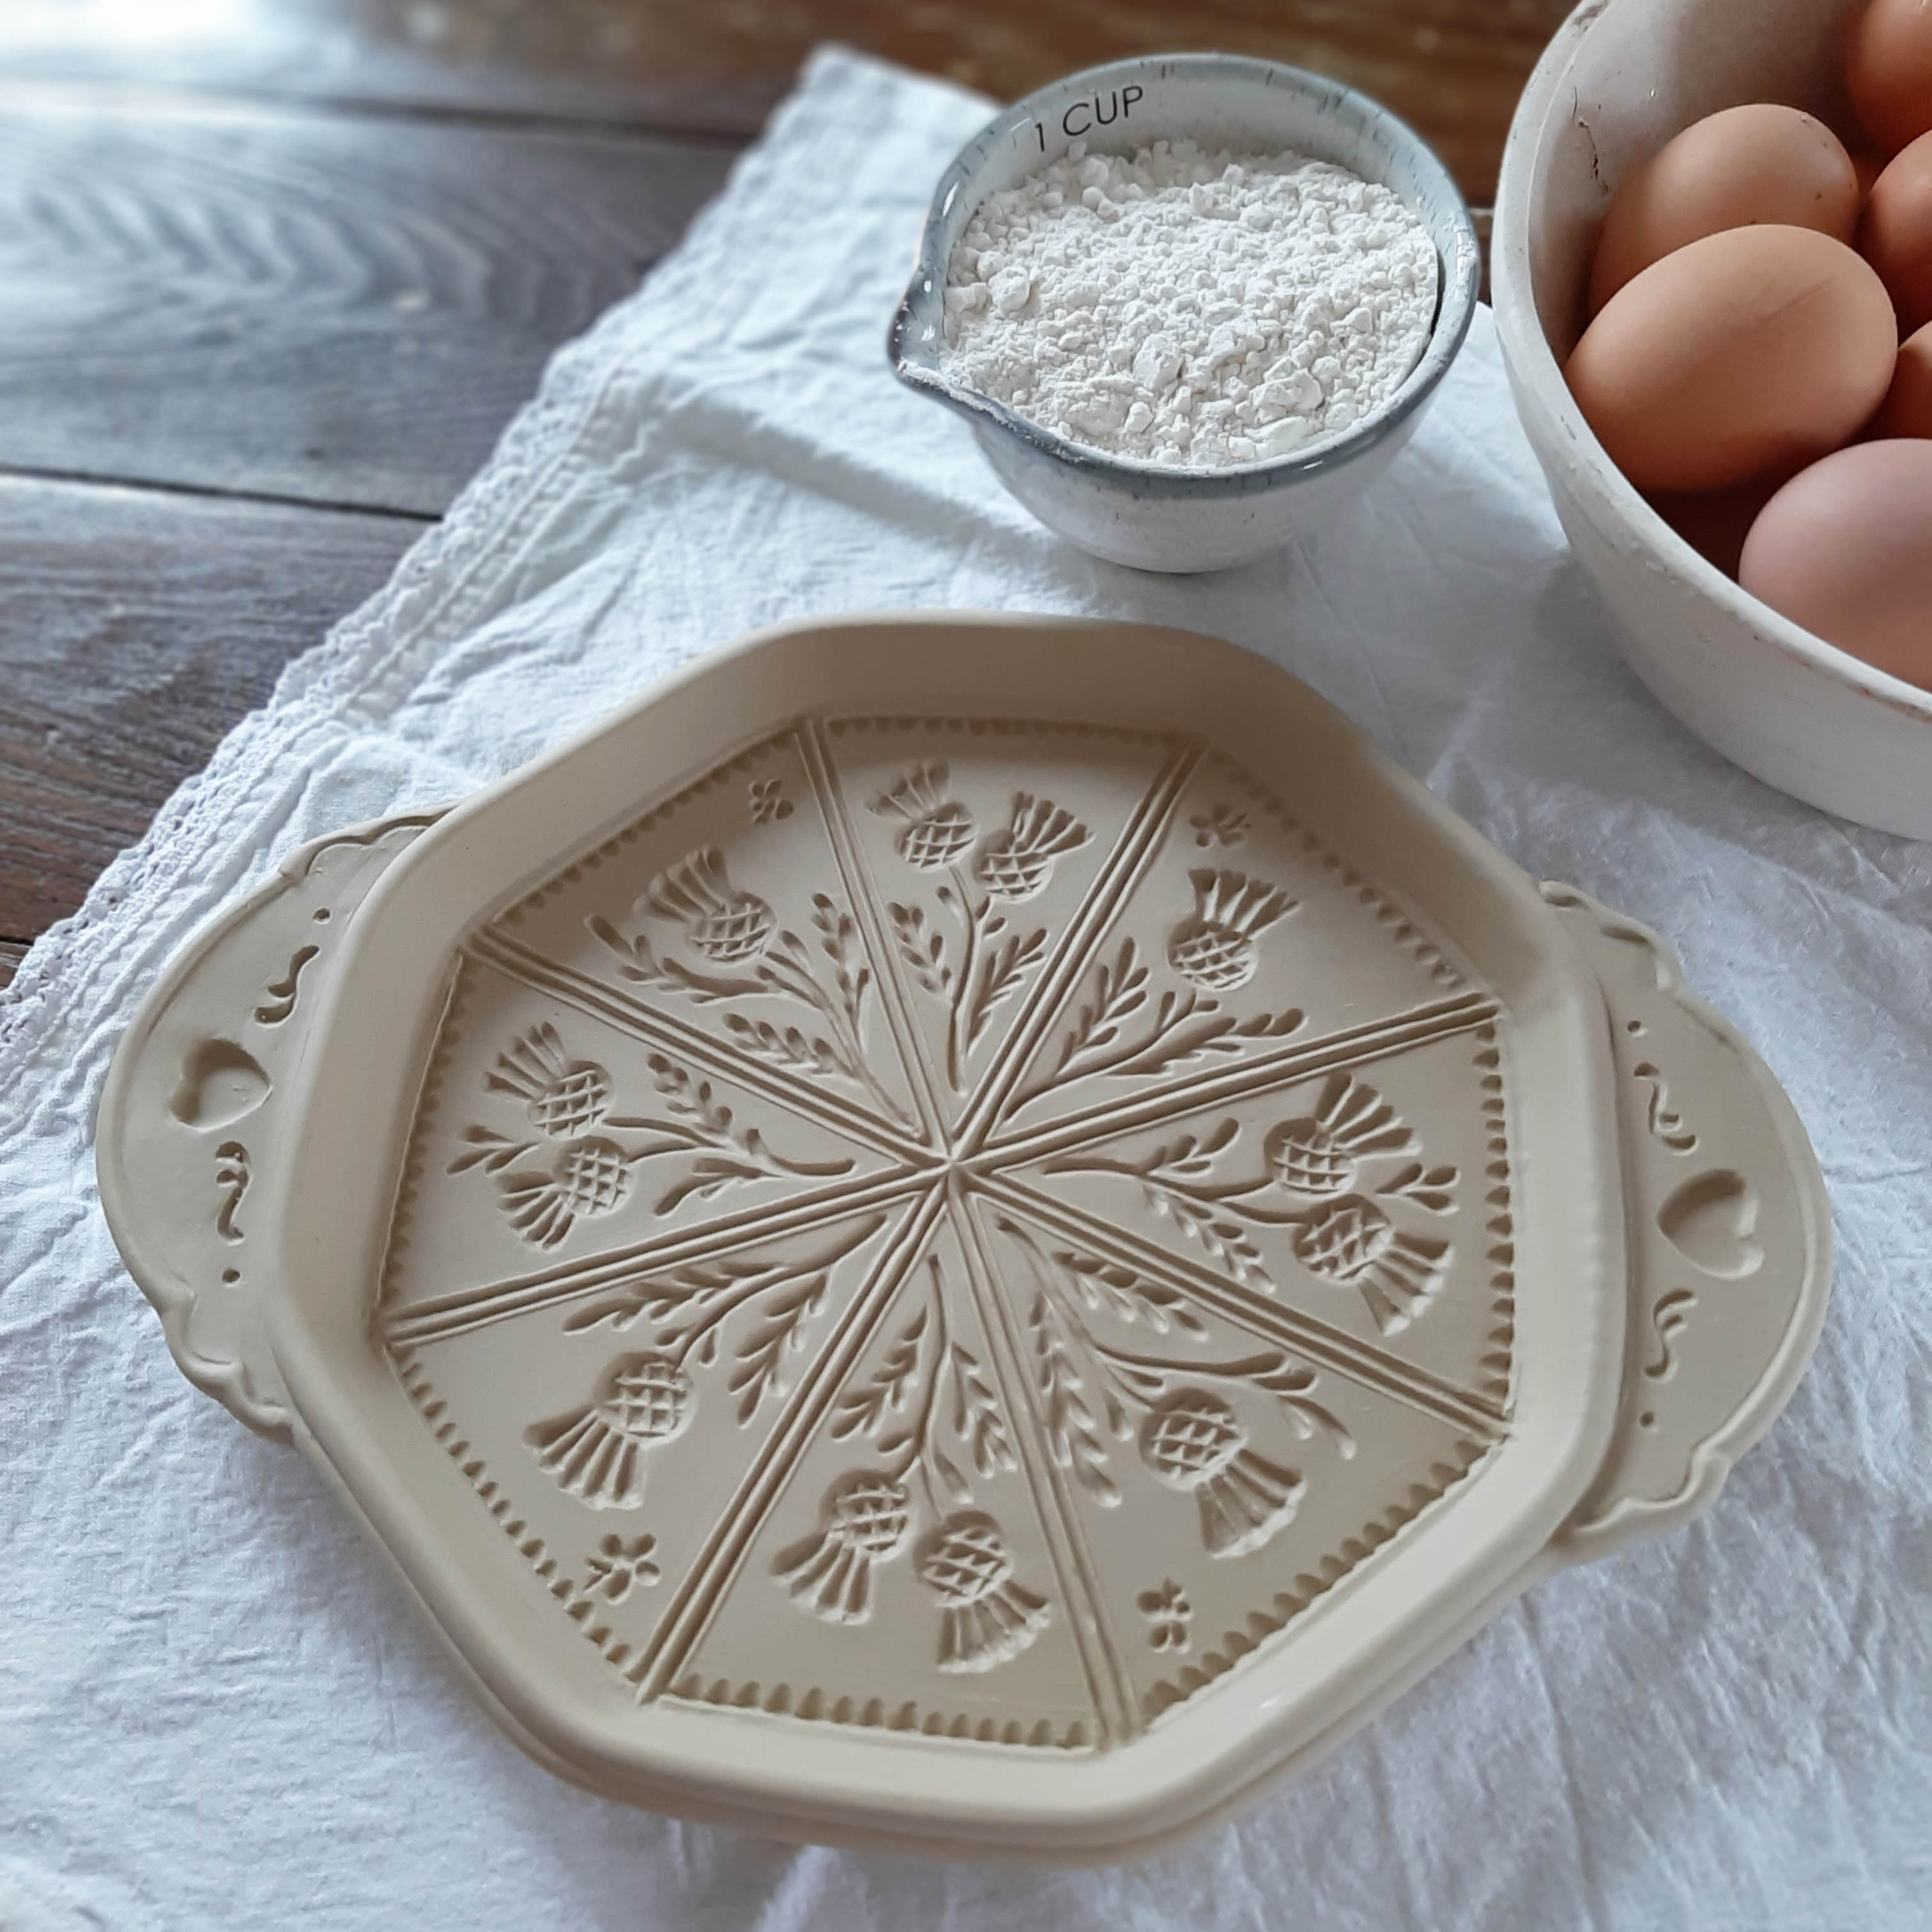 British Isles Ceramic Shortbread Pan